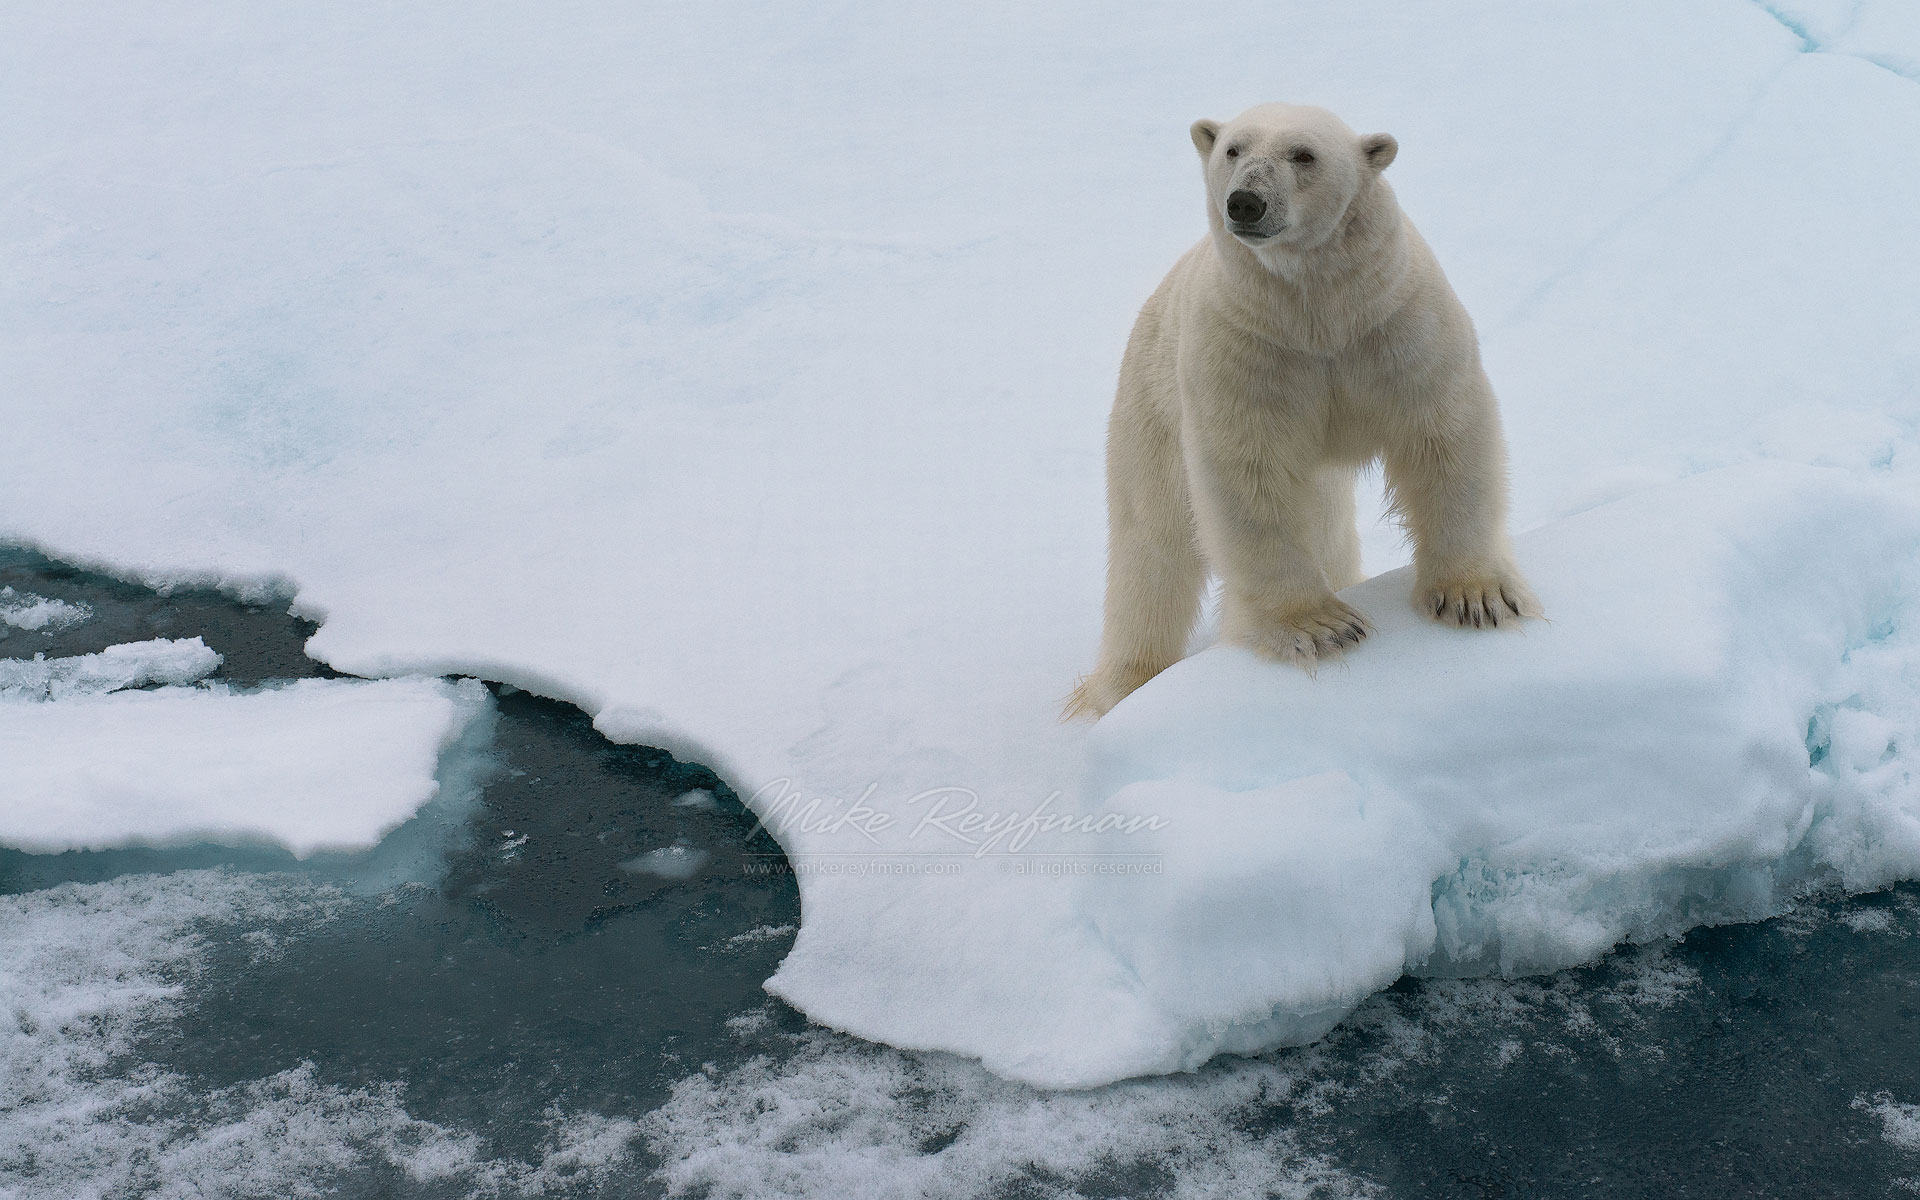 Polar bear on the sea ice in Svalbard, Norway. 81st parallel North. - Polar-Bears-Svalbard-Spitsbergen-Norway - Mike Reyfman Photography